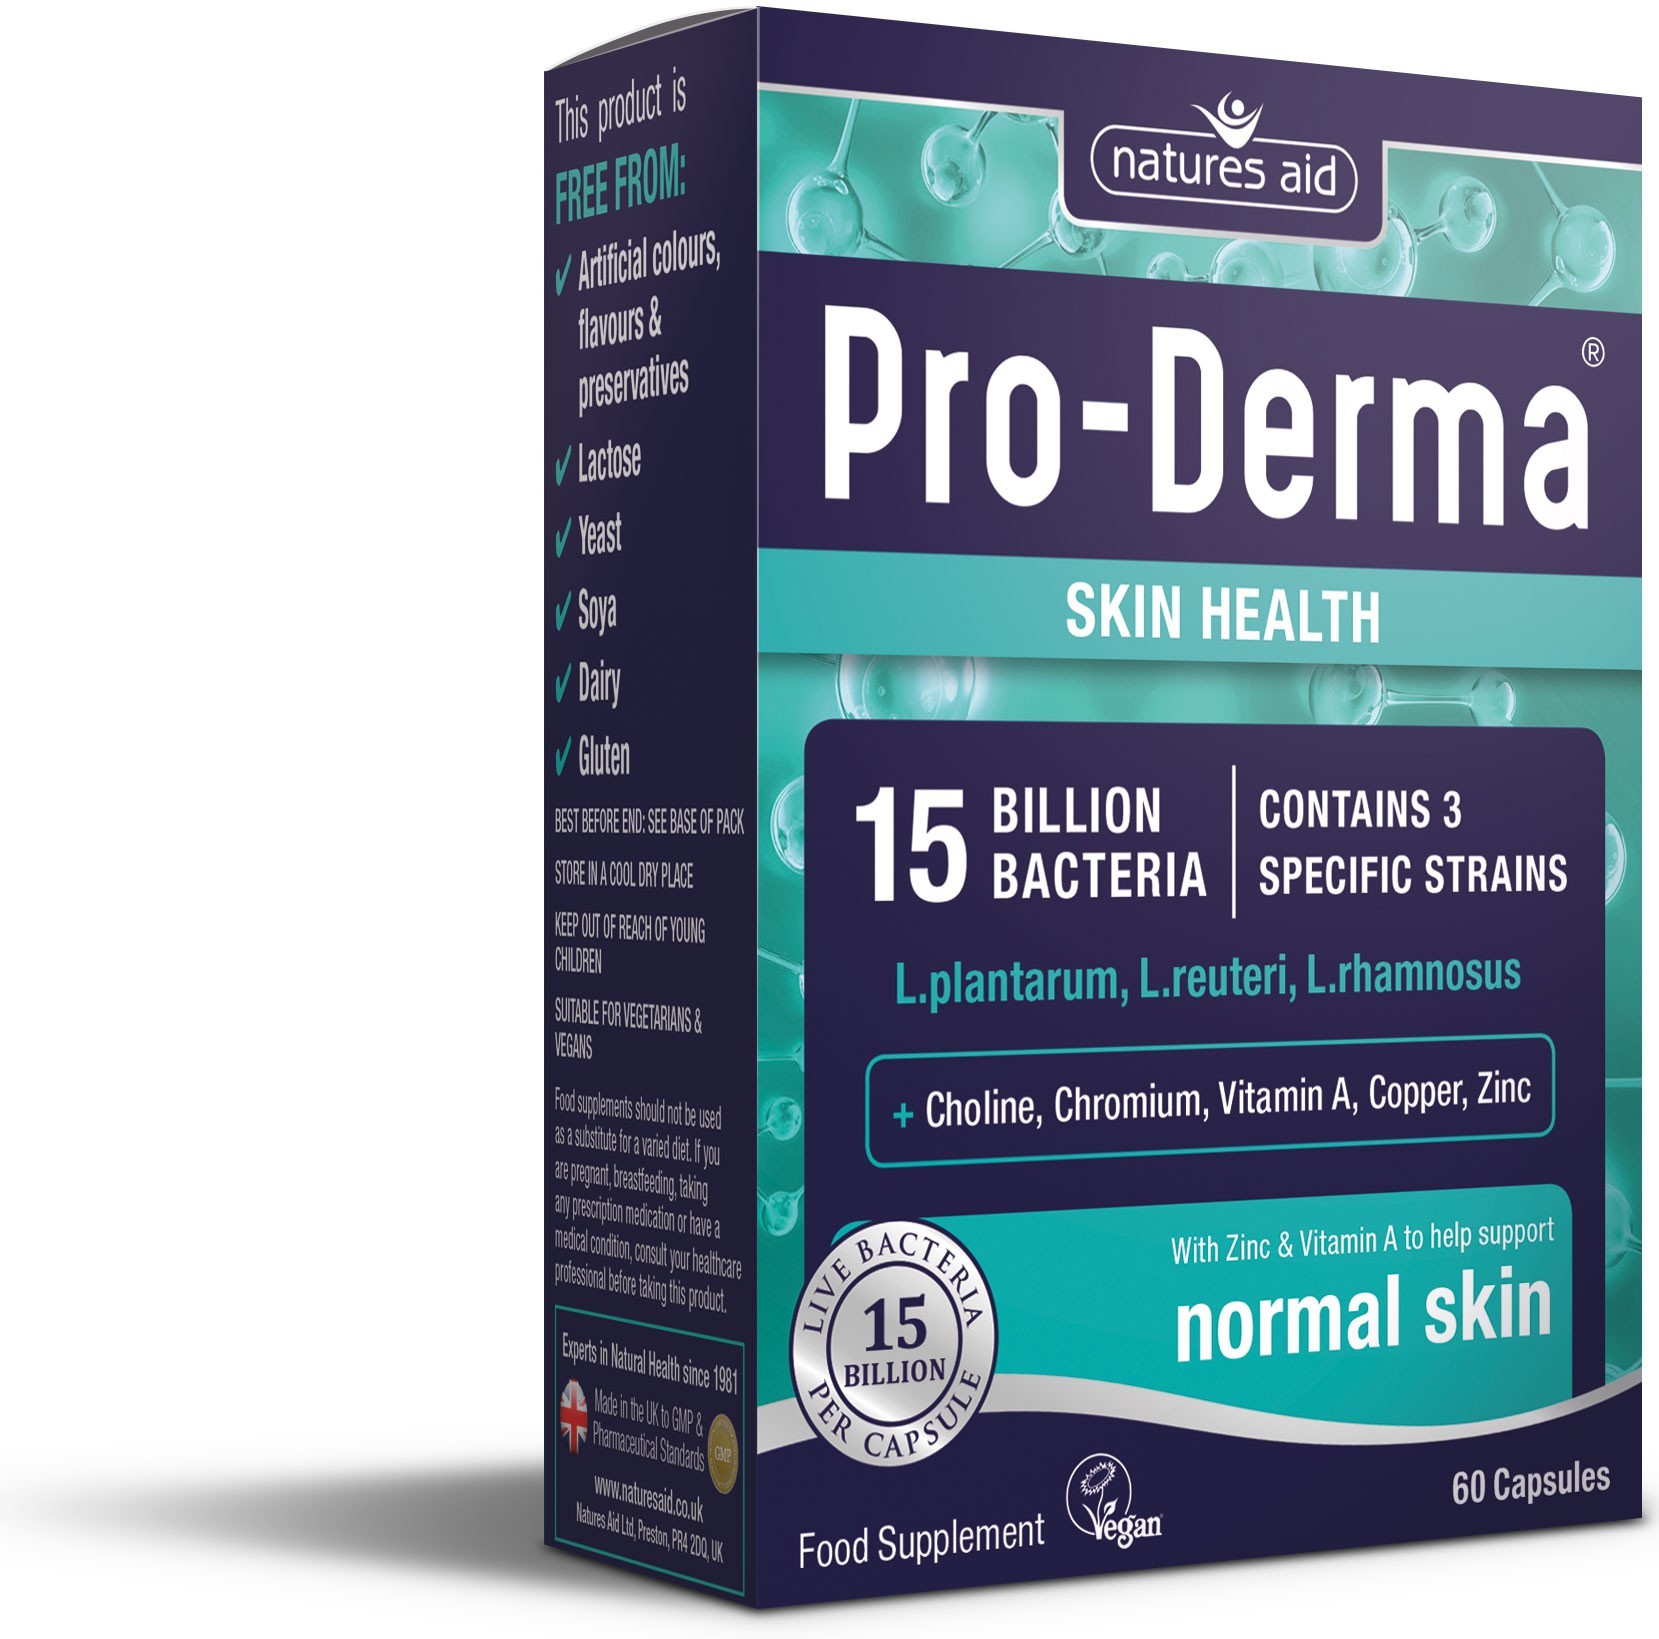 Natures Aid Pro-Derma (15 Billion Bacteria) With Choline, Chromium, Vitamin A, Copper & Zinc